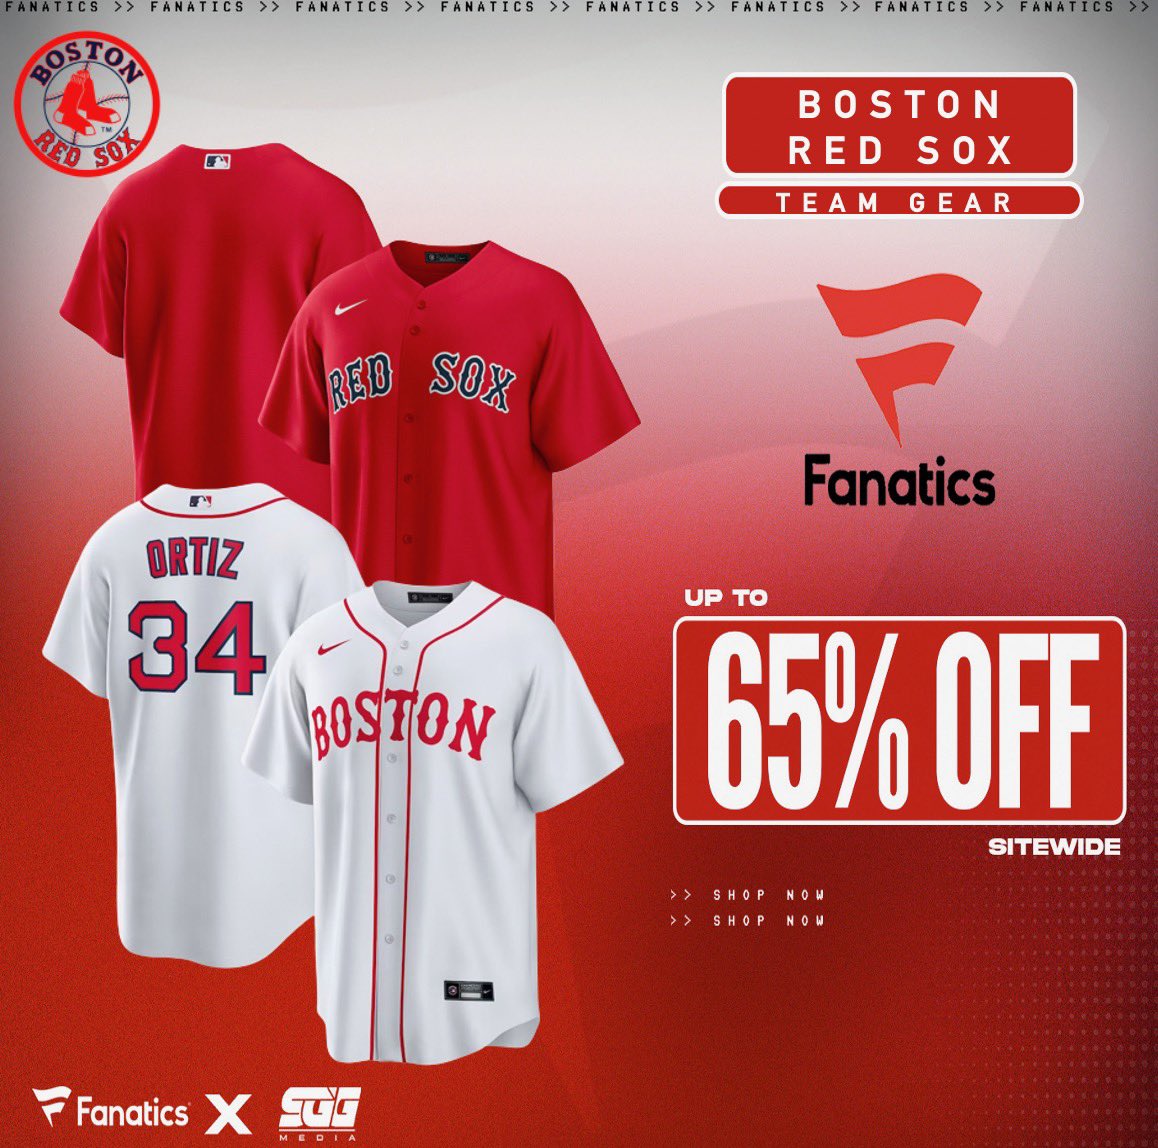 SGG Promos on X: MLB SUPER SALE, @Fanatics, UP TO 65% OFF BOSTON